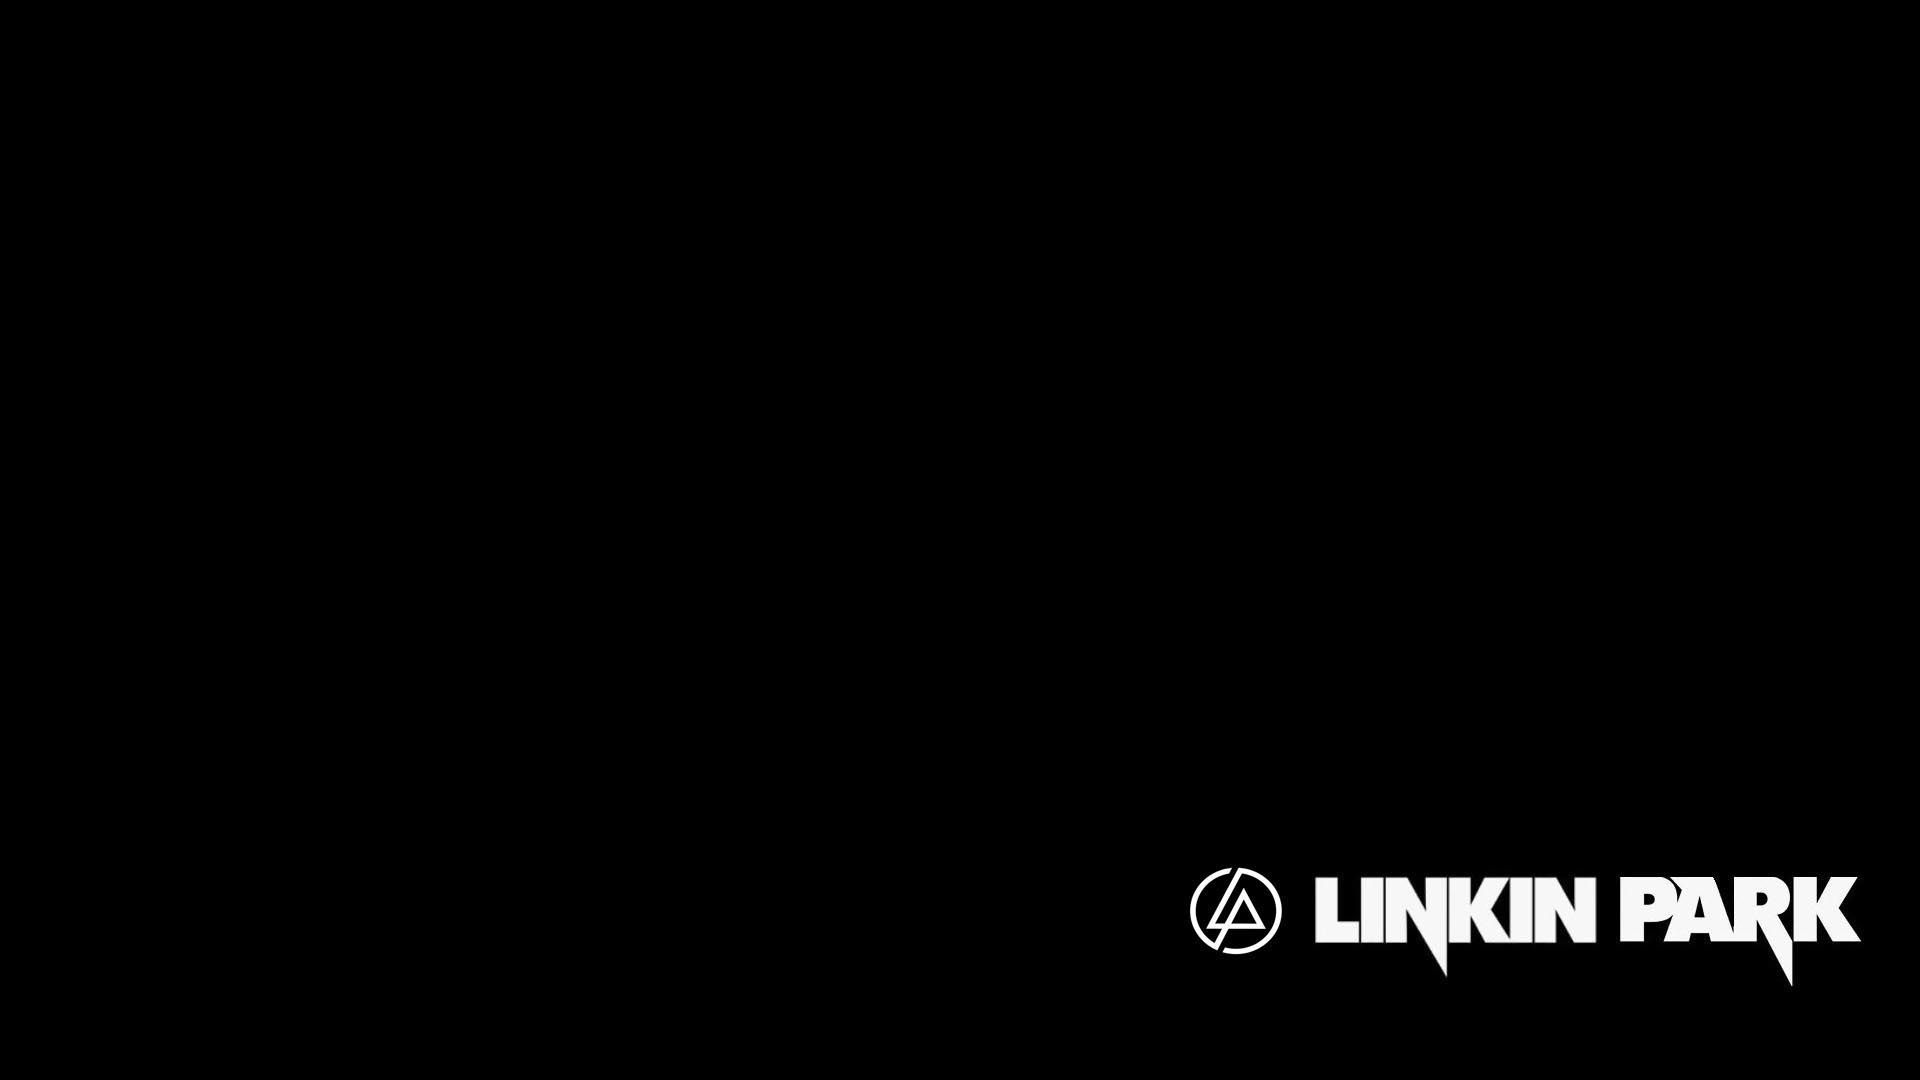 Linkin Park HD Background - Pitch Black by rohynrajesh on DeviantArt